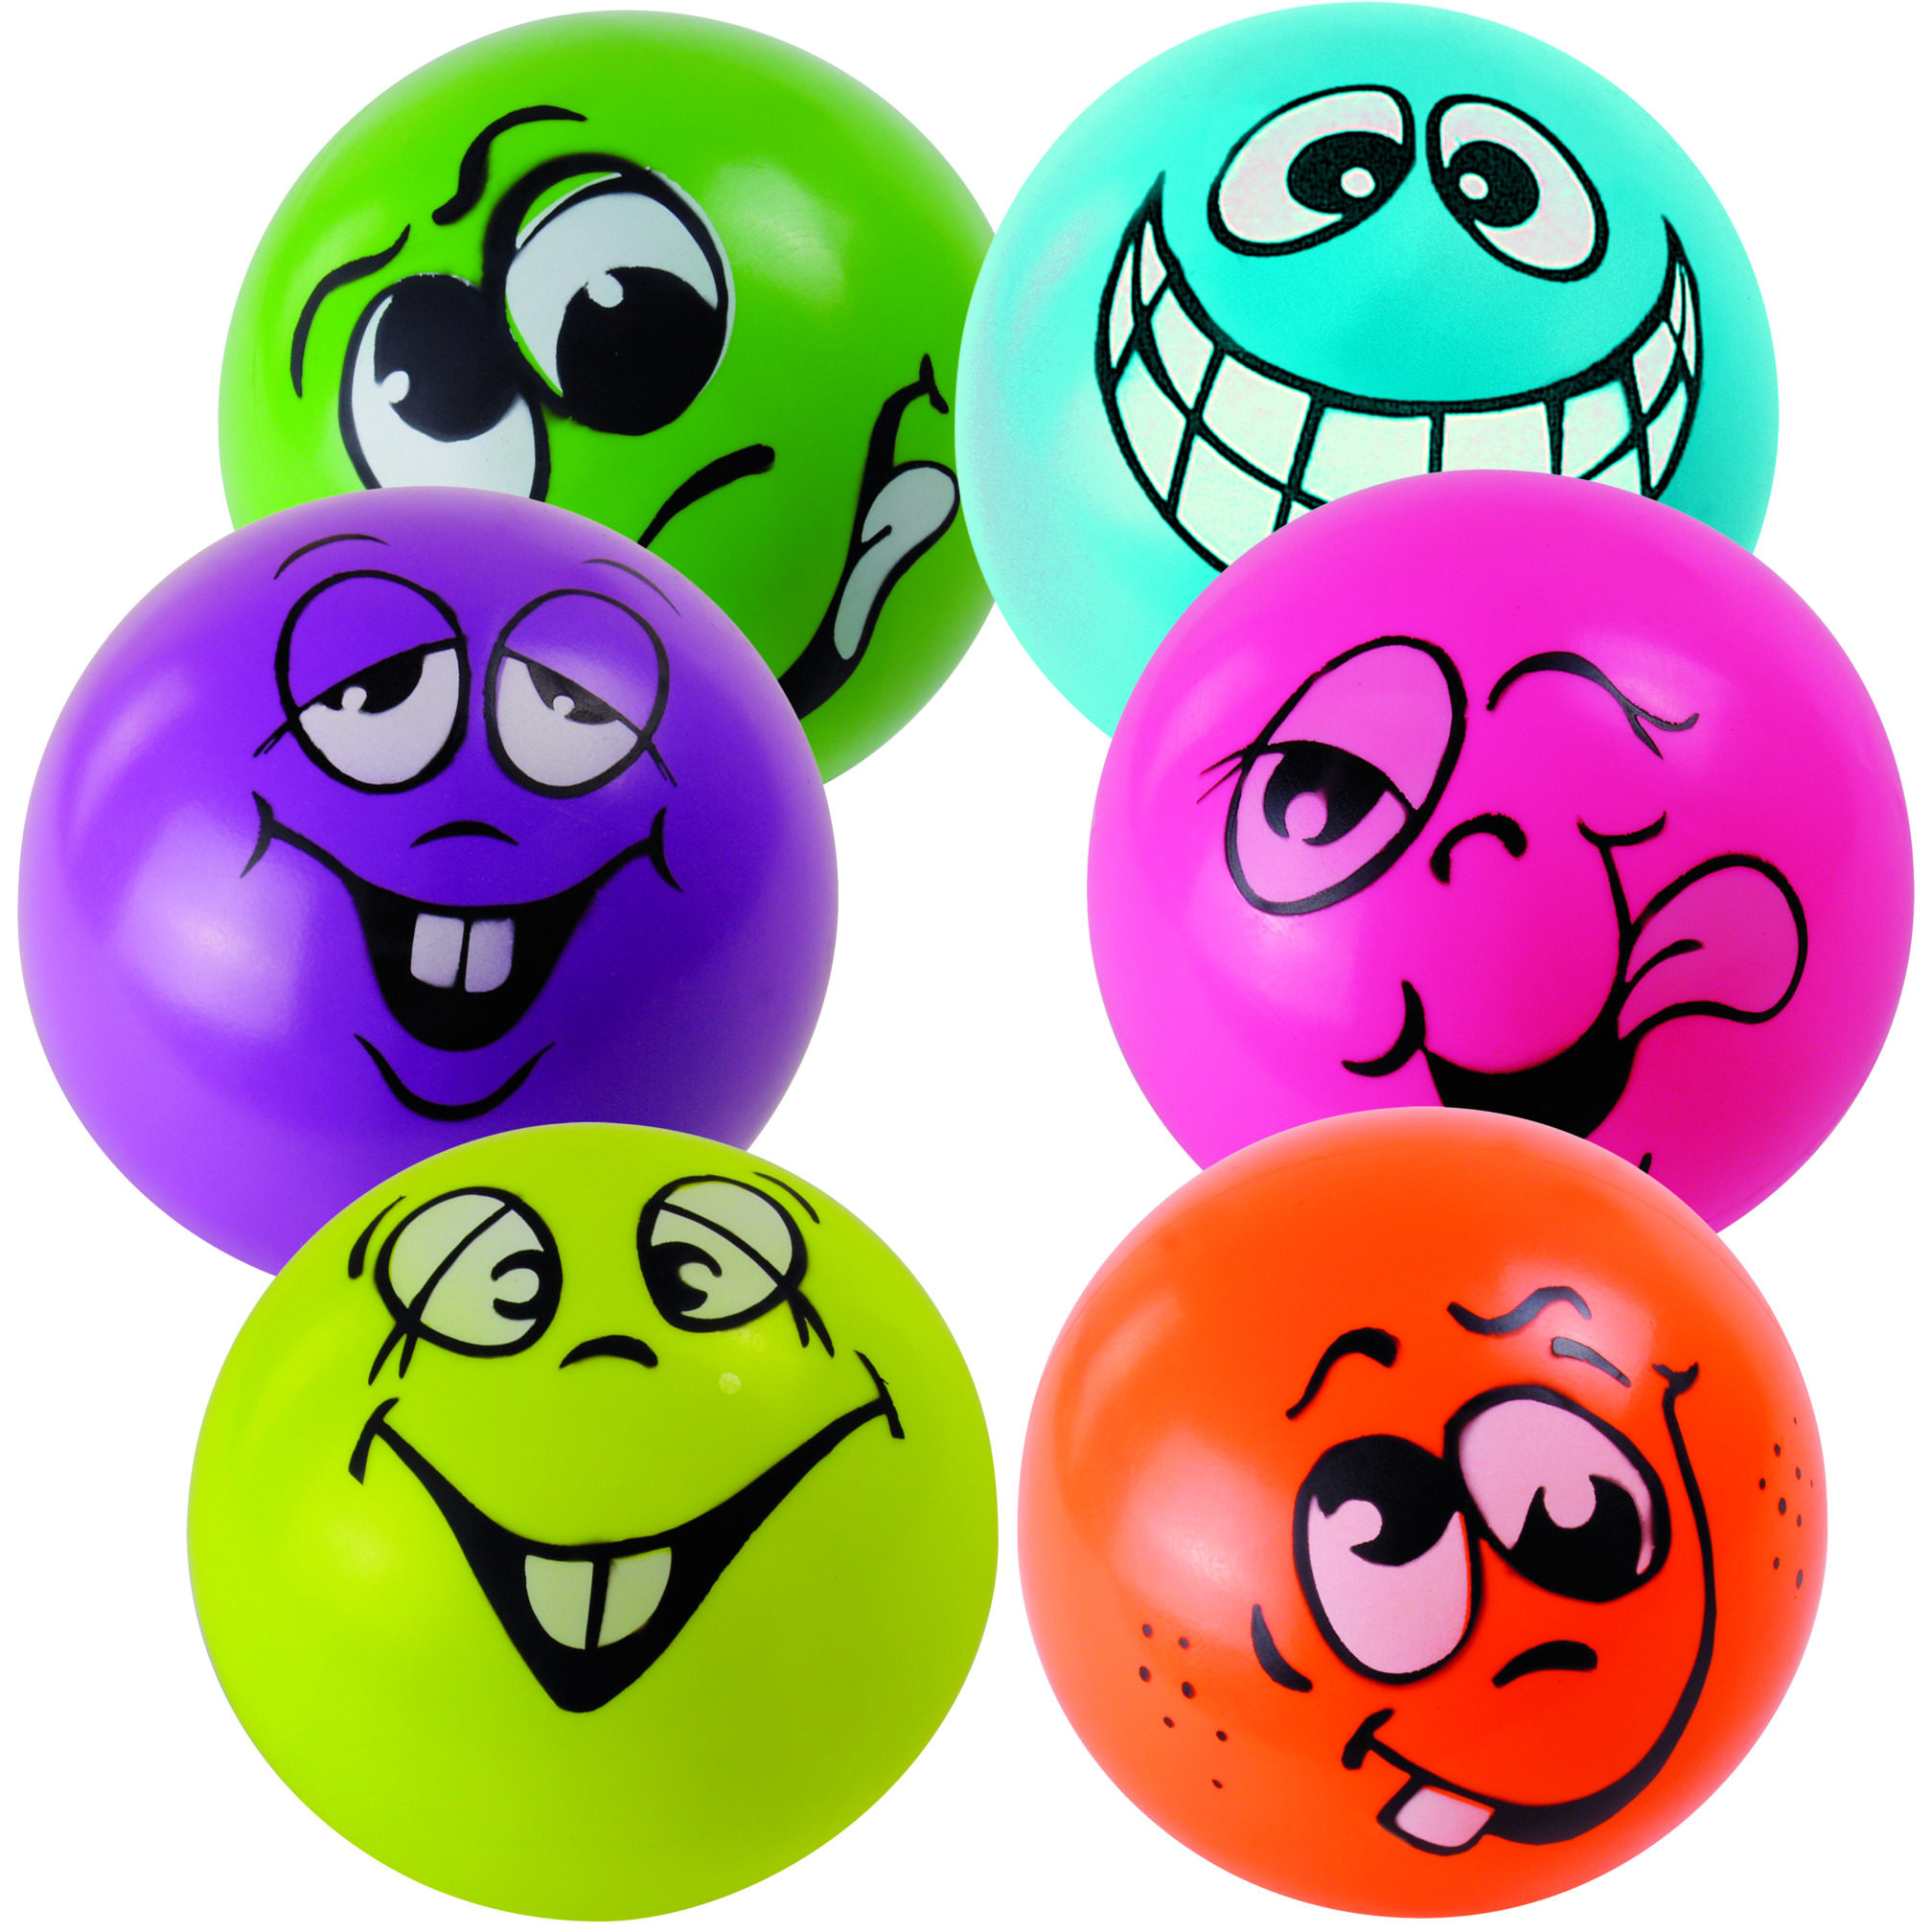 Funny faces ball set, 6 balls